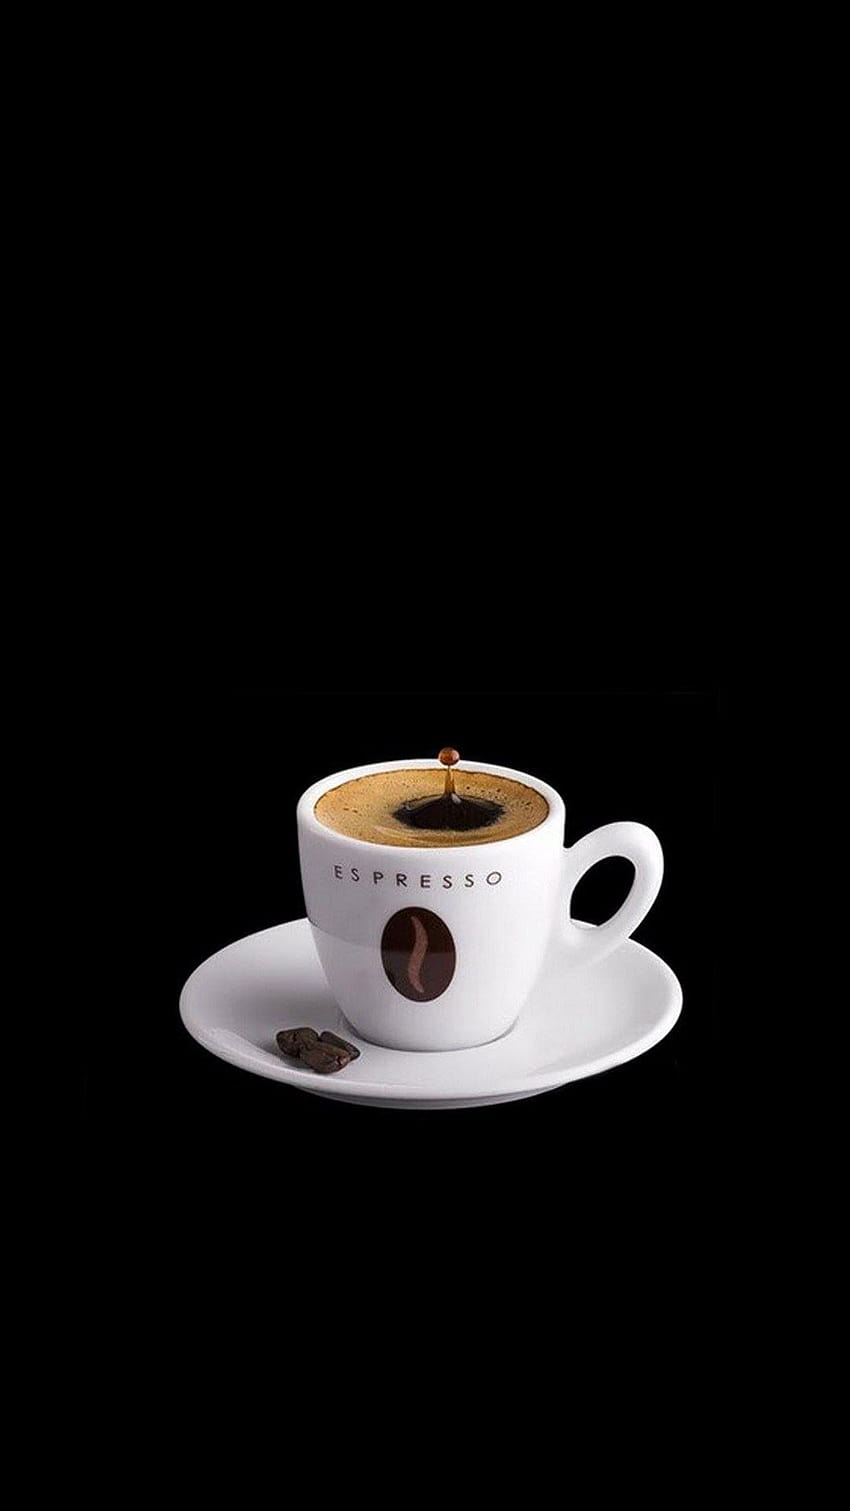 Espresso Coffee Cup iPhone 8 HD phone wallpaper